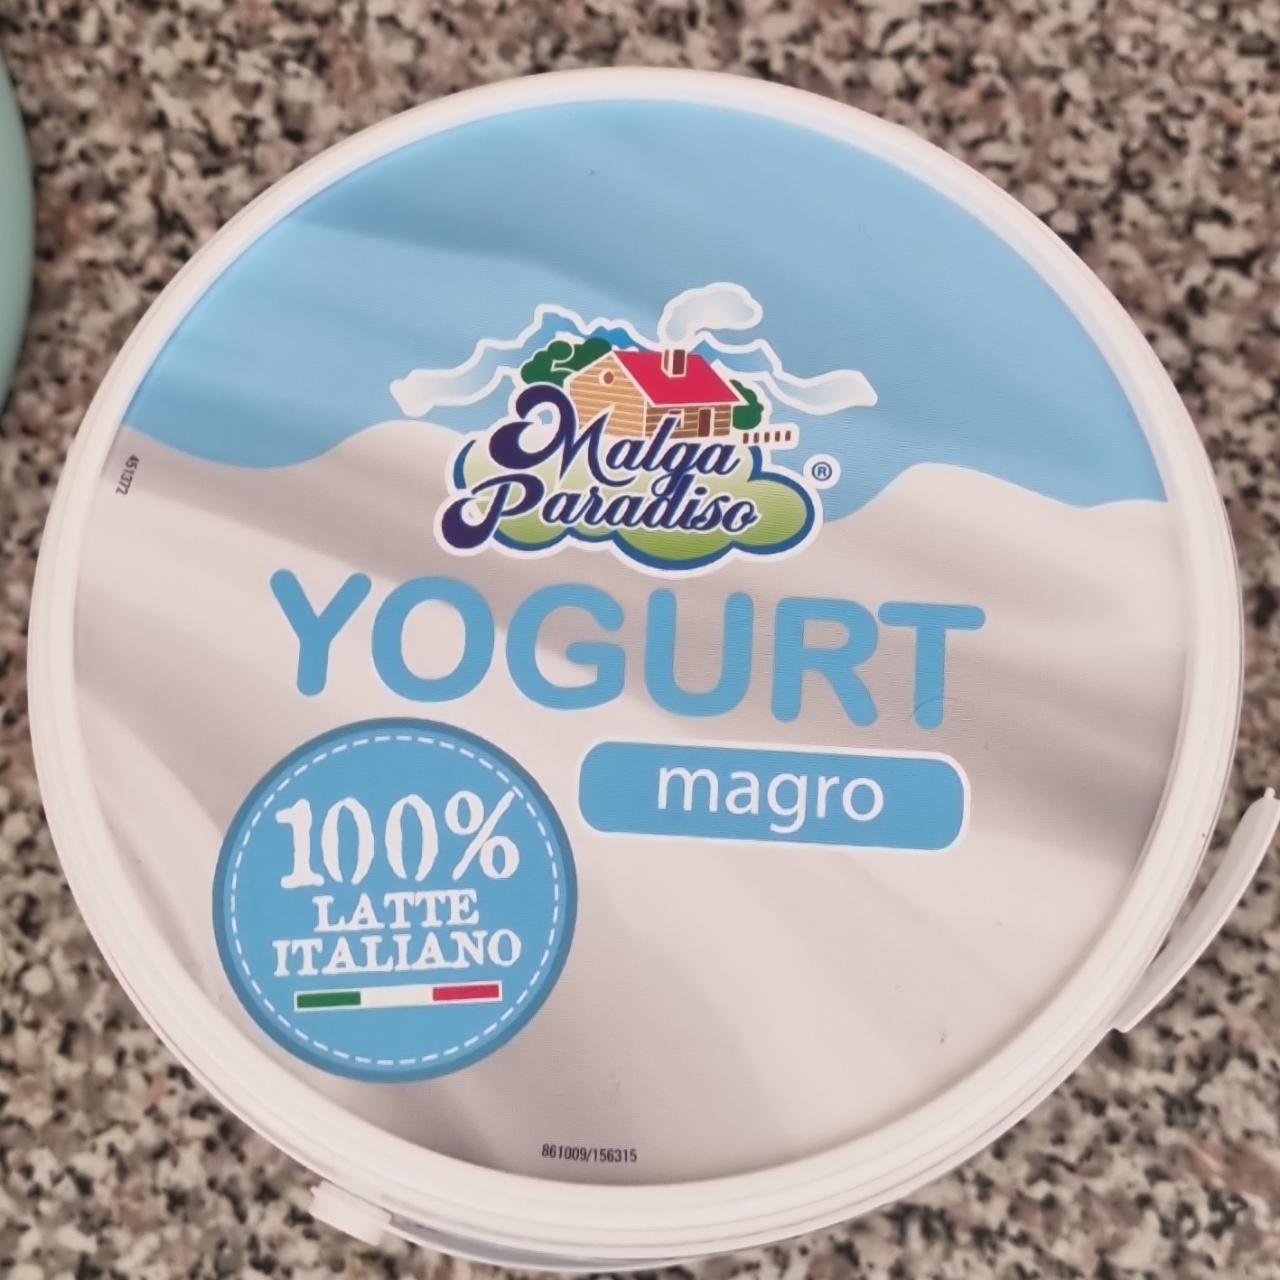 Fotografie - Yogurt Magro Malga Paradiso